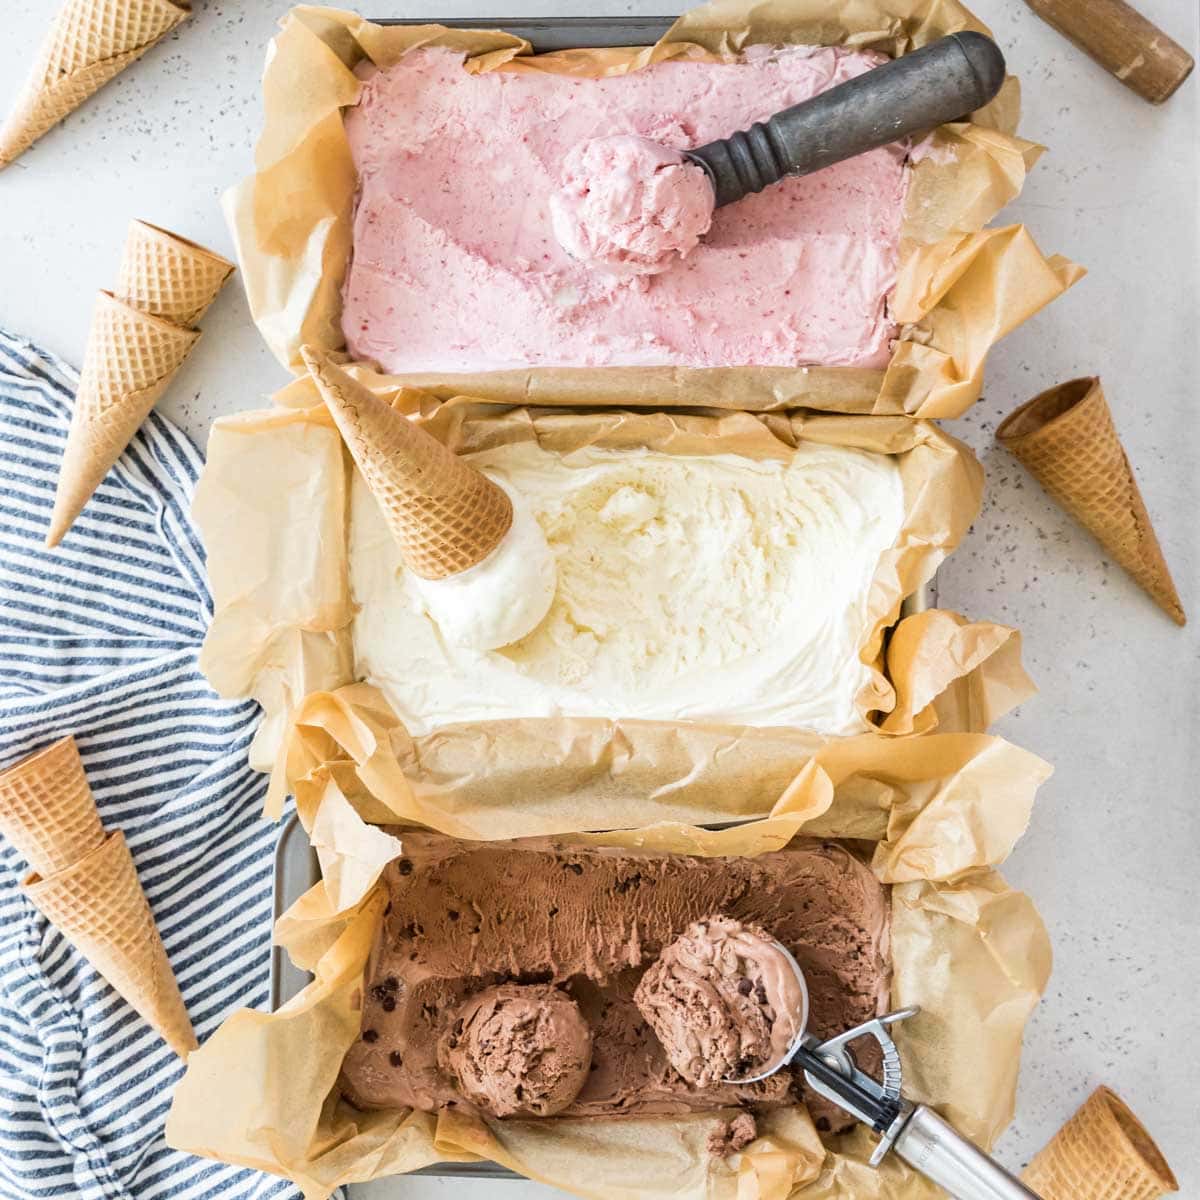 1 1/2 Gallon Plastic Ice Cream Tubs (Without Lids) - 10 Count - Frozen  Dessert Supplies